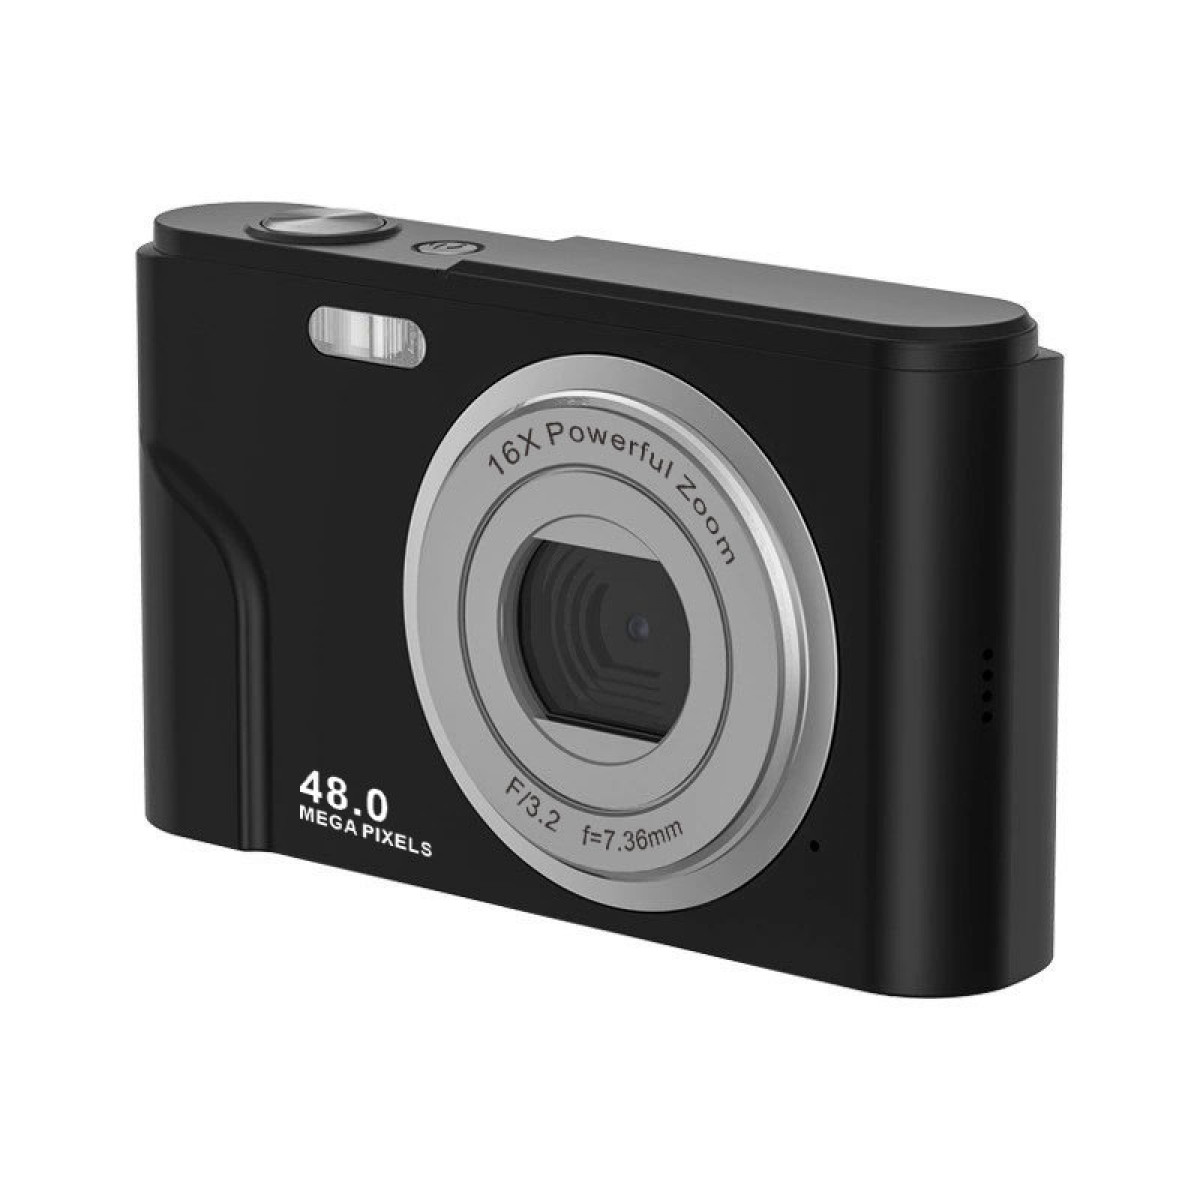 Digitalkamera 48 1080P schwarz- 16-facher Zoom Digitalkamera / Megapixel INF /